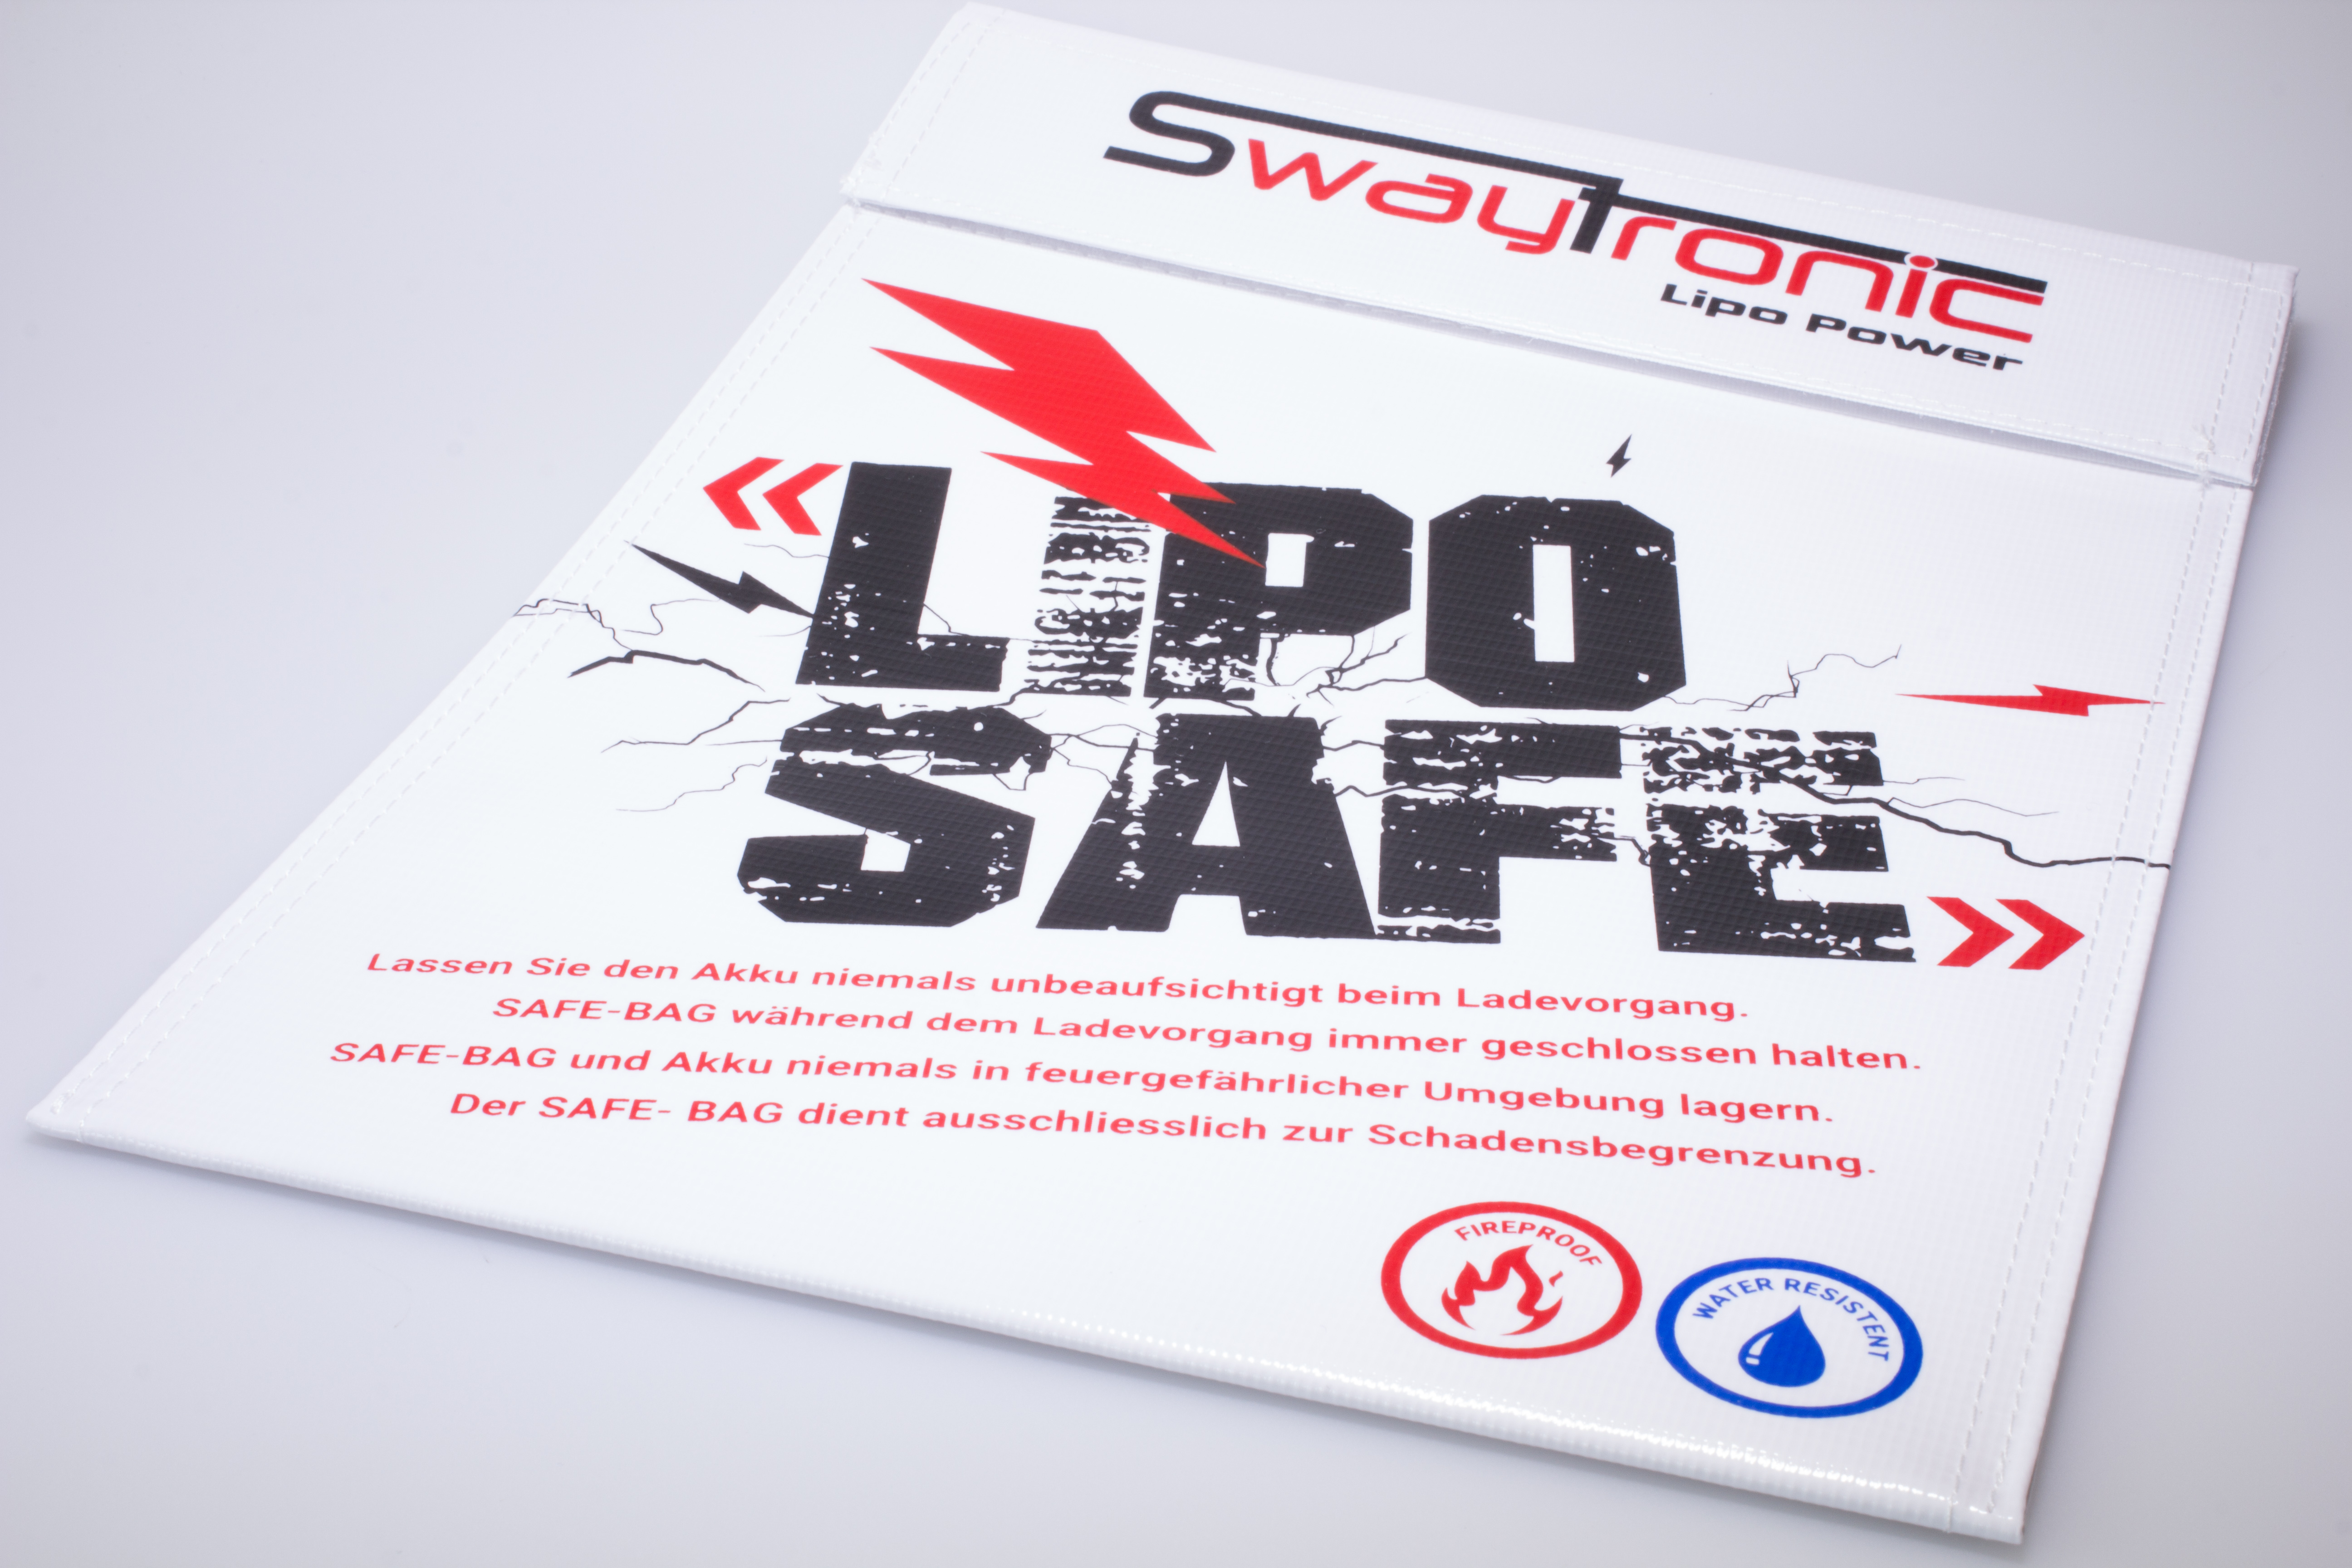 SWAYTRONIC LiPo SAFE-BAG white